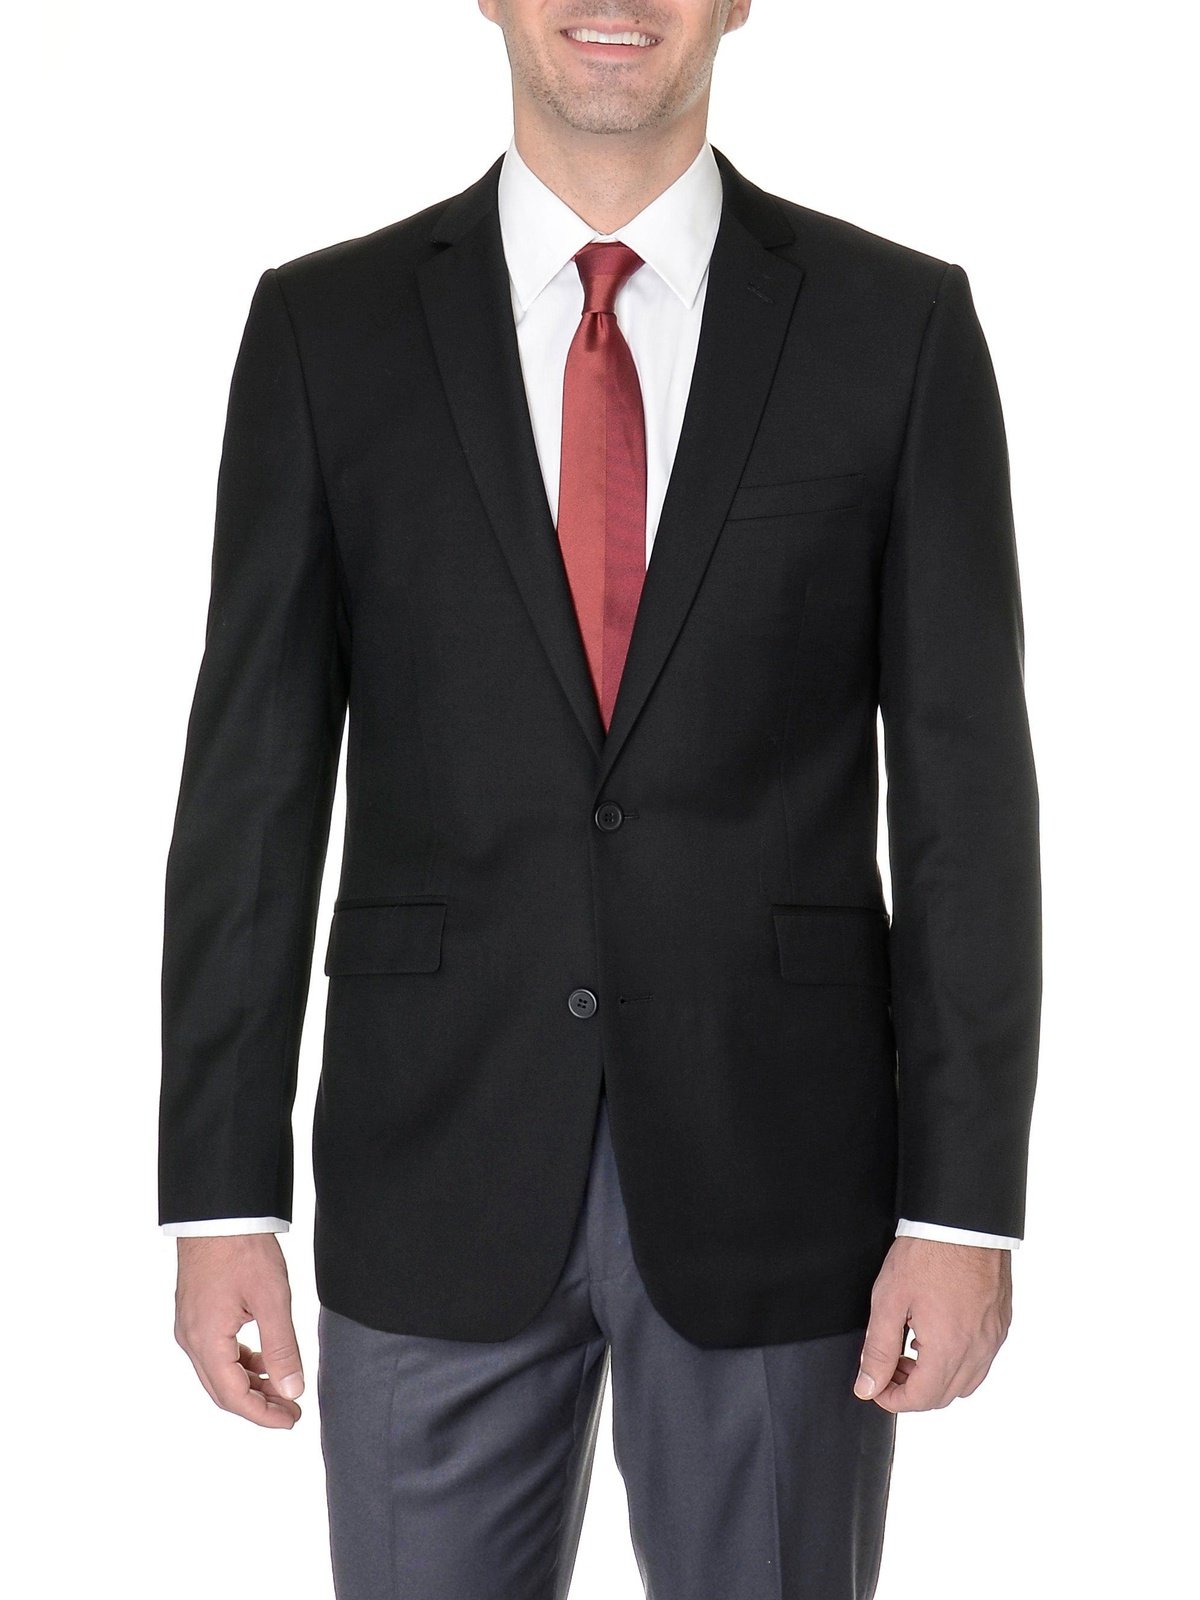 Raphael BLAZERS Raphael Regular Fit Solid Black Two Button Blazer Suit Jacket